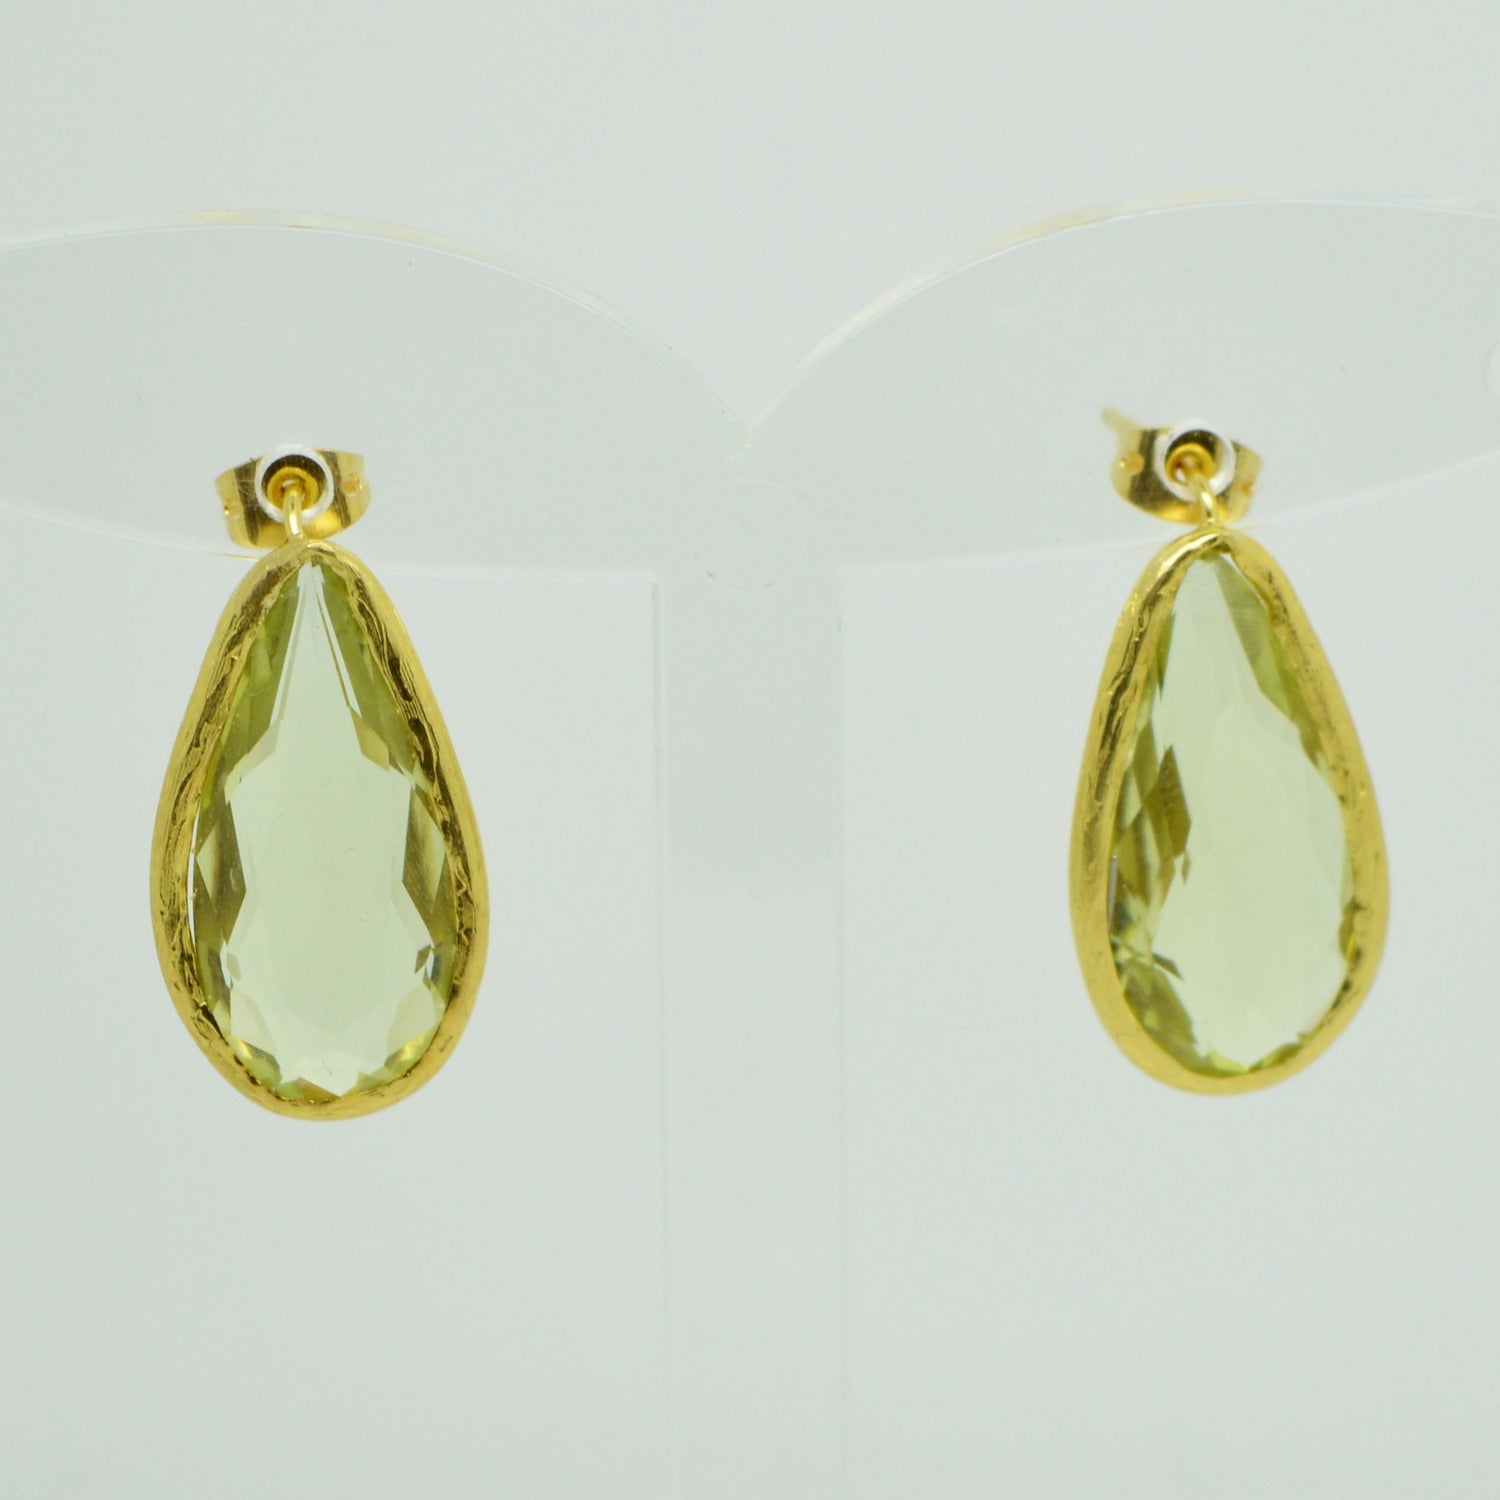 Aylas gold plated semi precious gem stone earrings teardrop Lemon Quartz - Ottoman Handmade Jewellery Hand Made Gold Plated